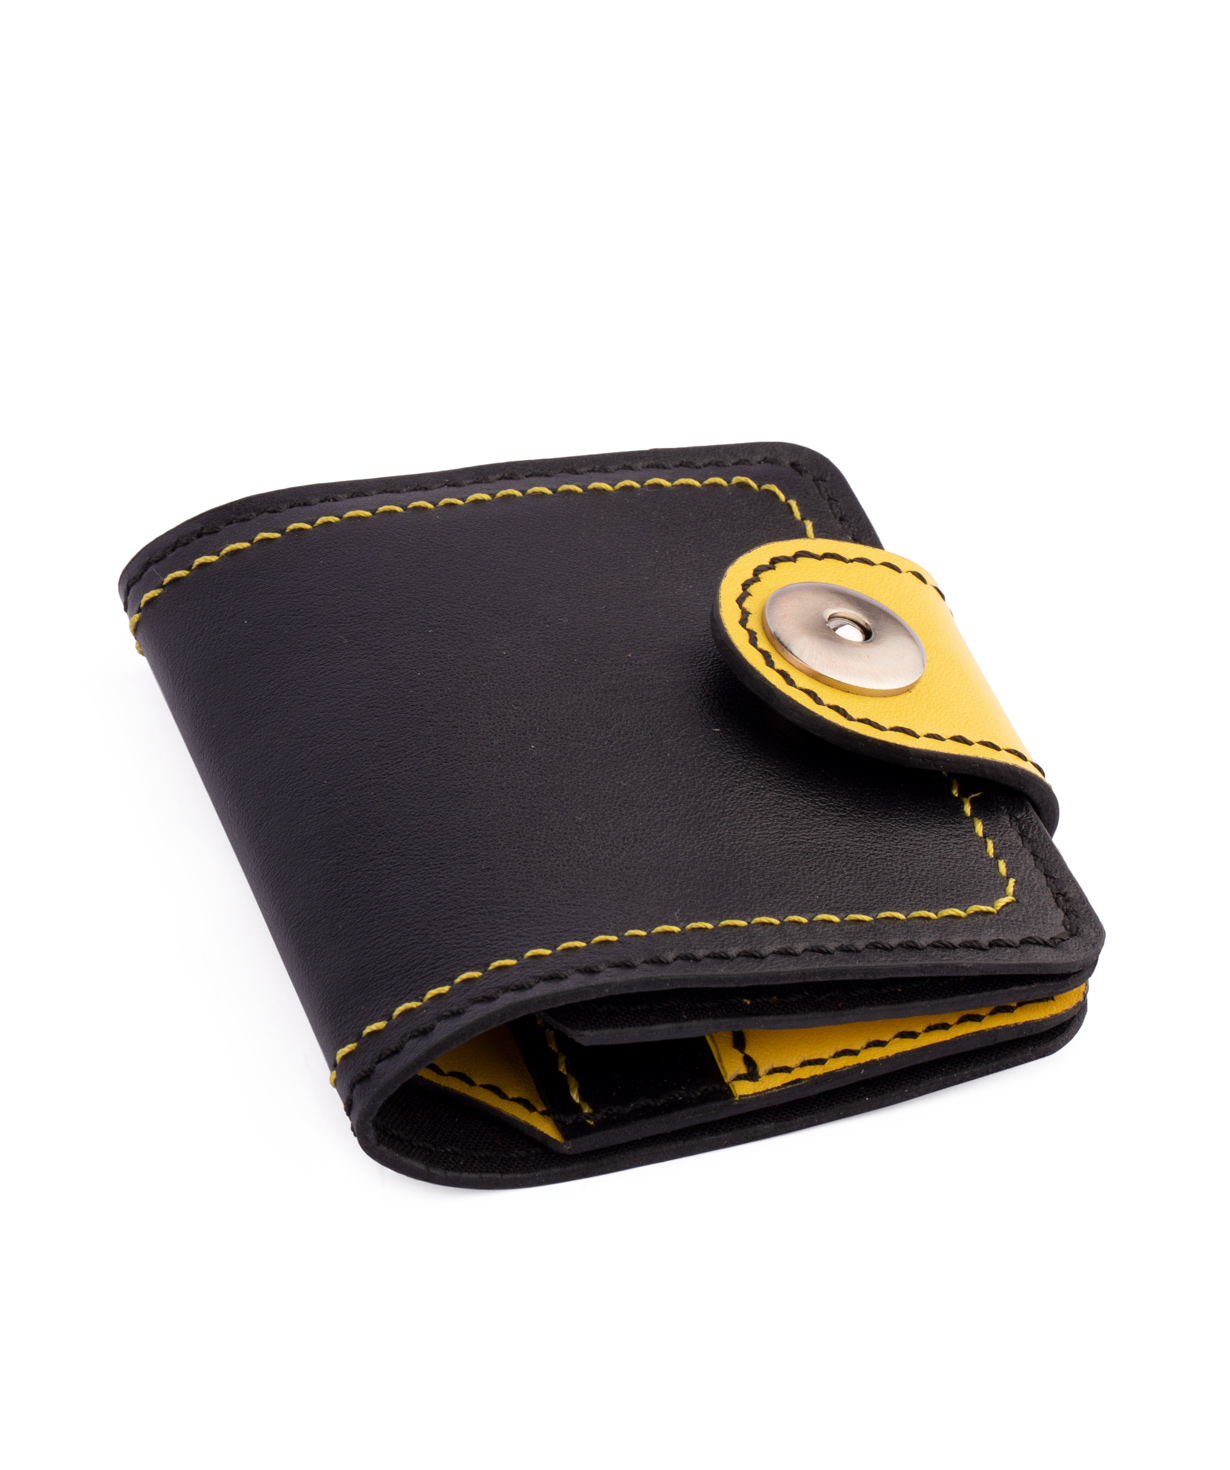 Wallet `Ruben's bag` handmade №2